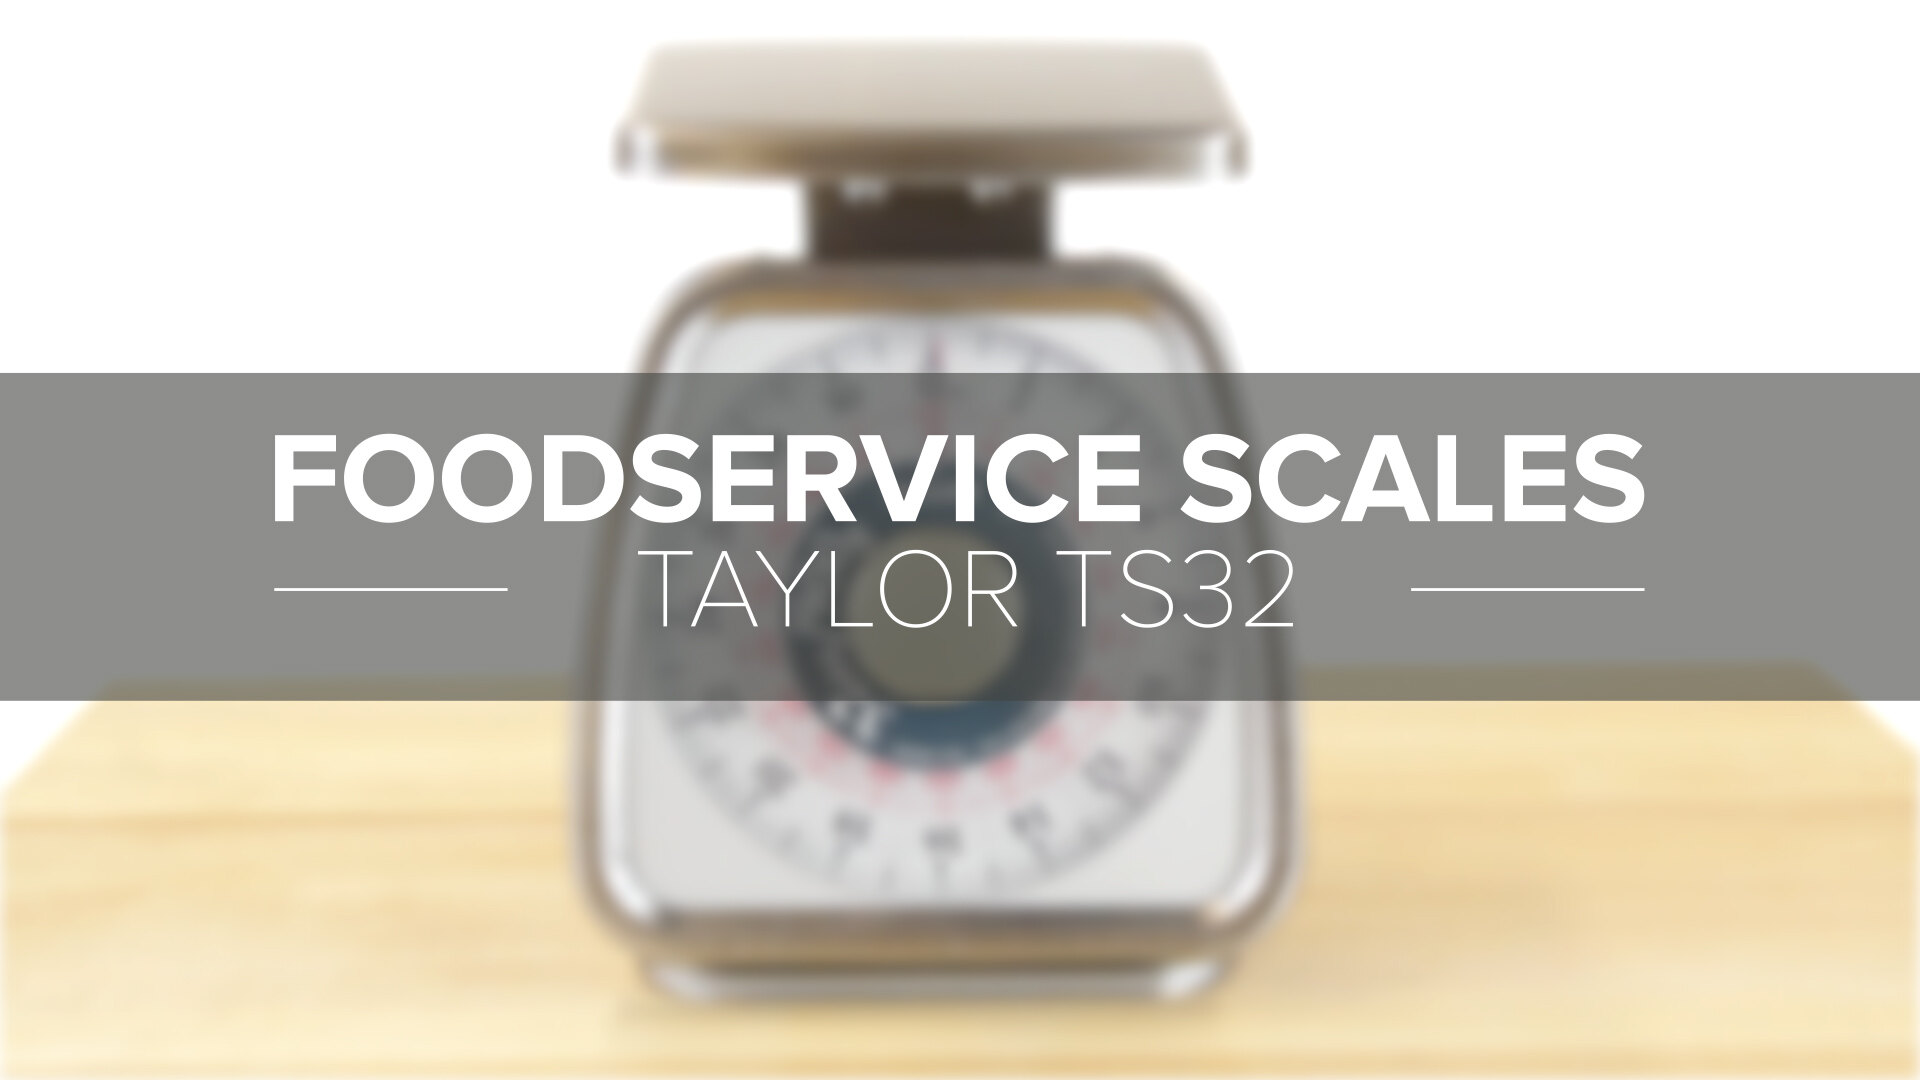 Taylor TS50 Heavy-Duty Mechanical SS Food Scale, 50 lb x 4 oz. Rotating Dial